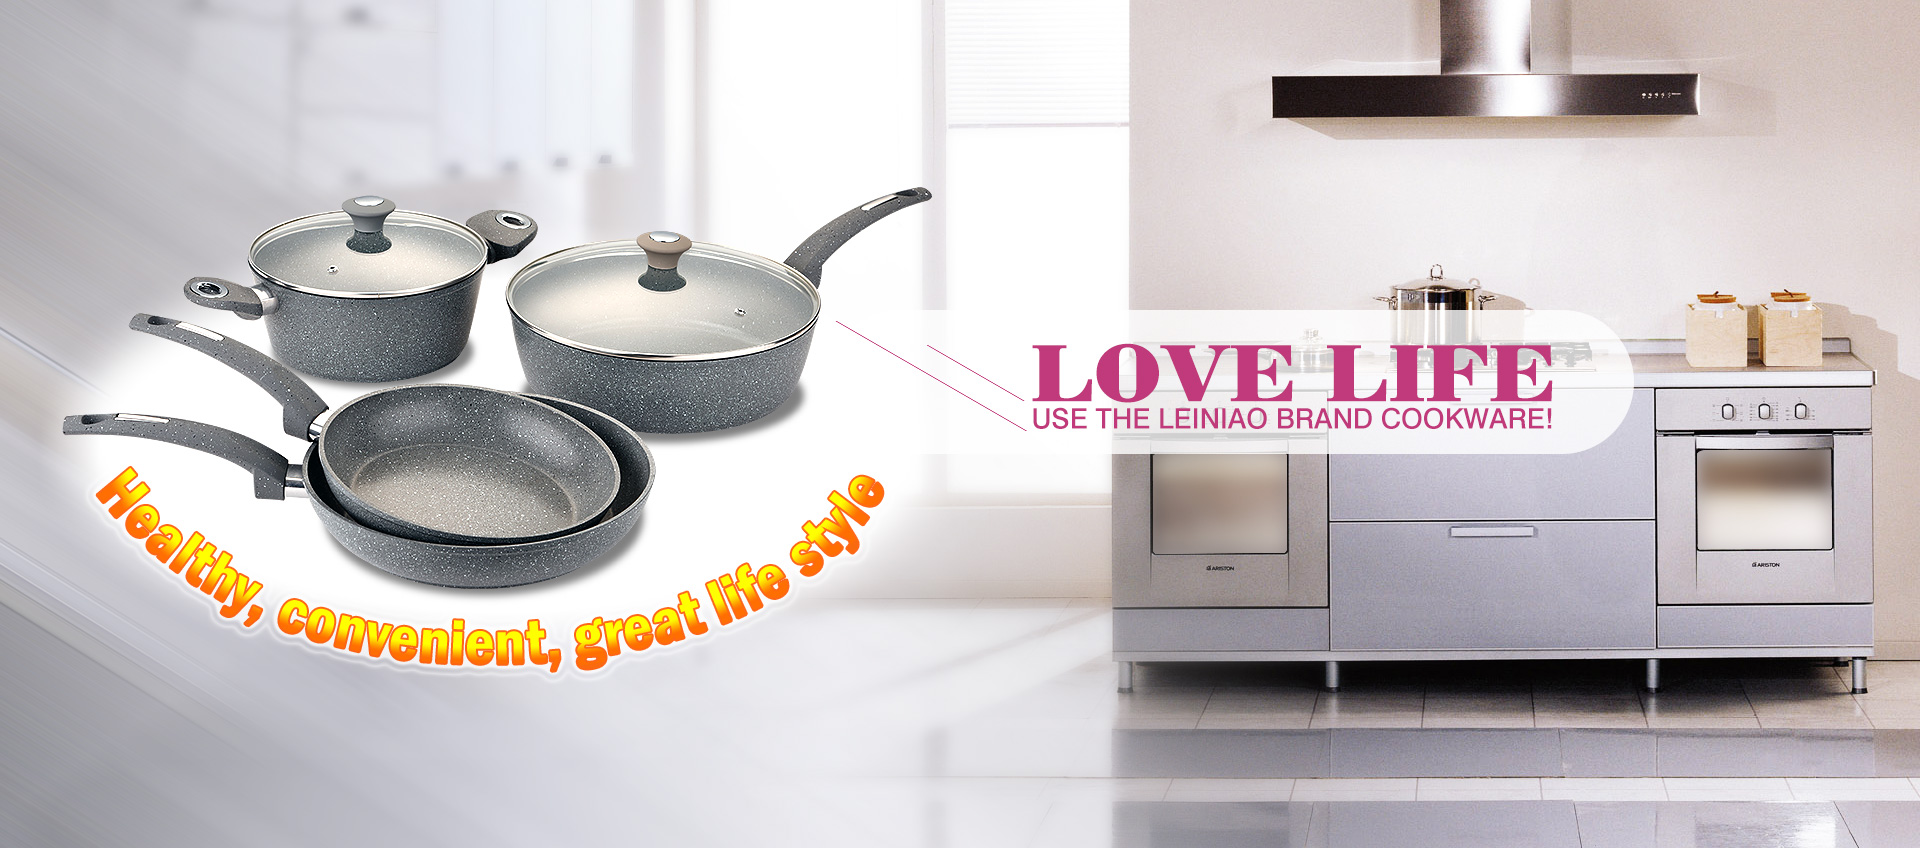 love life,use the leiniao brand cookware!-01